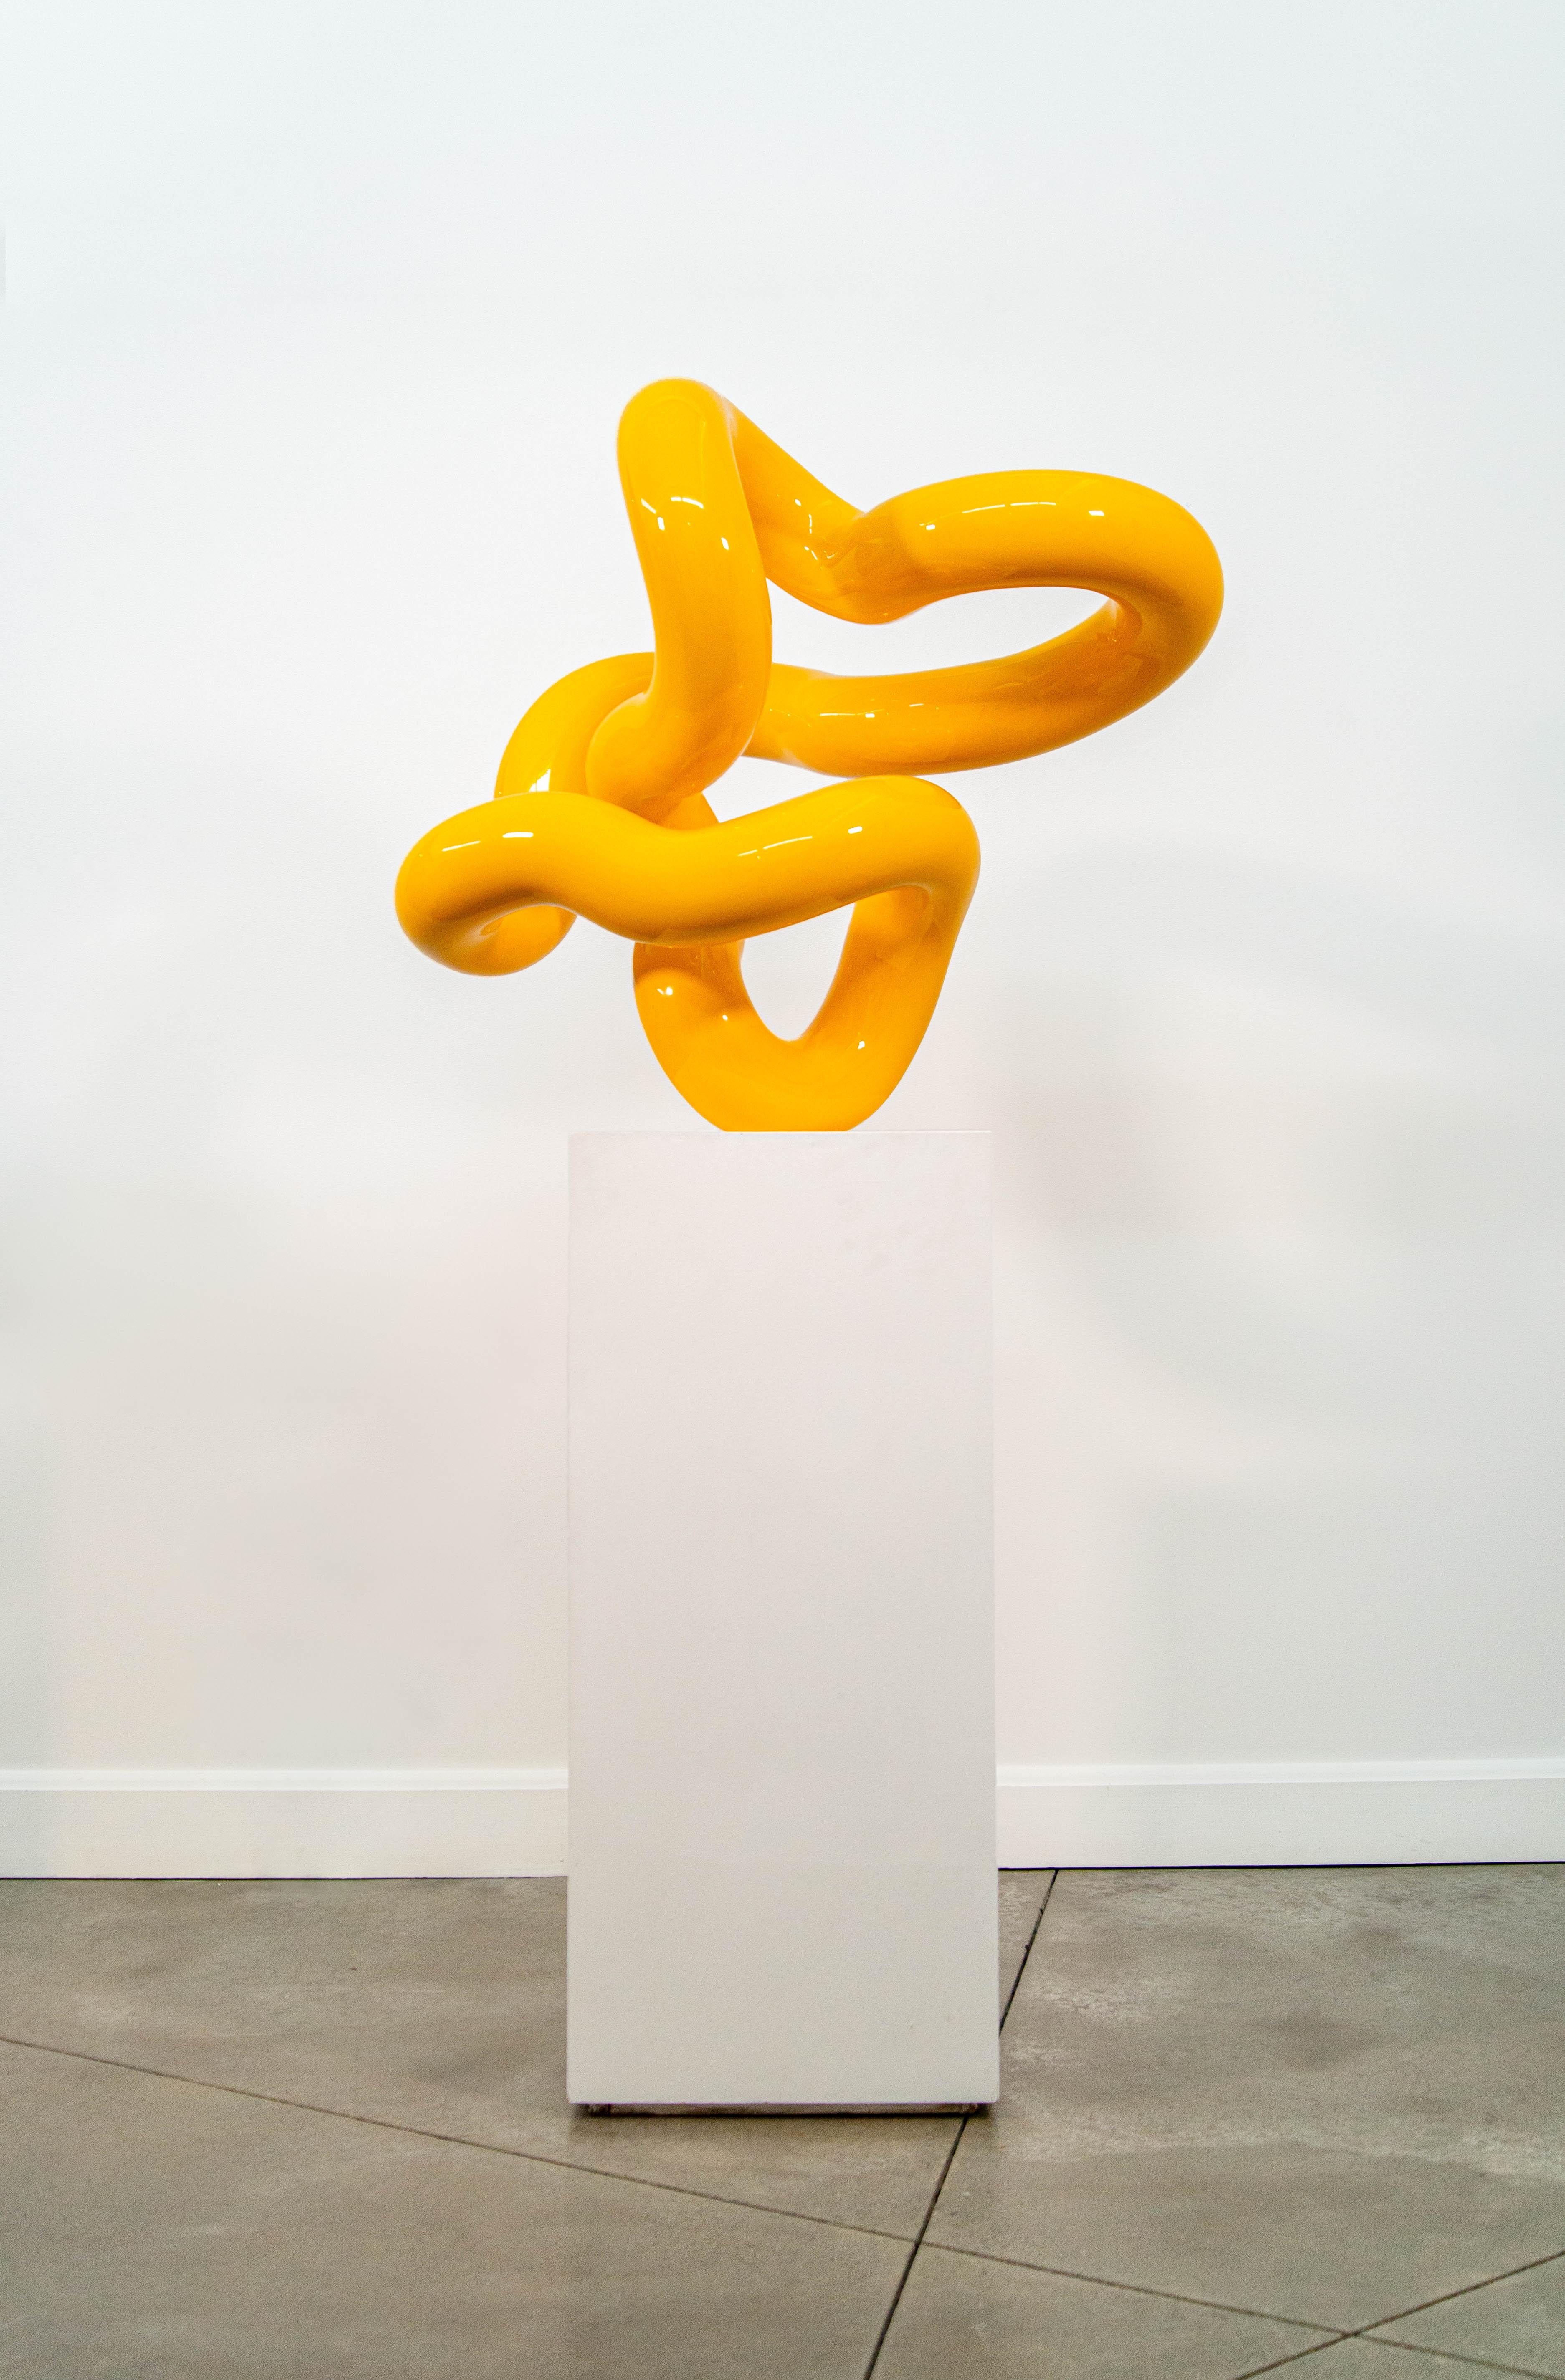 Circuit jaune - sculpture en acier inoxydable poli, abstraite et peinte - Sculpture de Alexander Caldwell